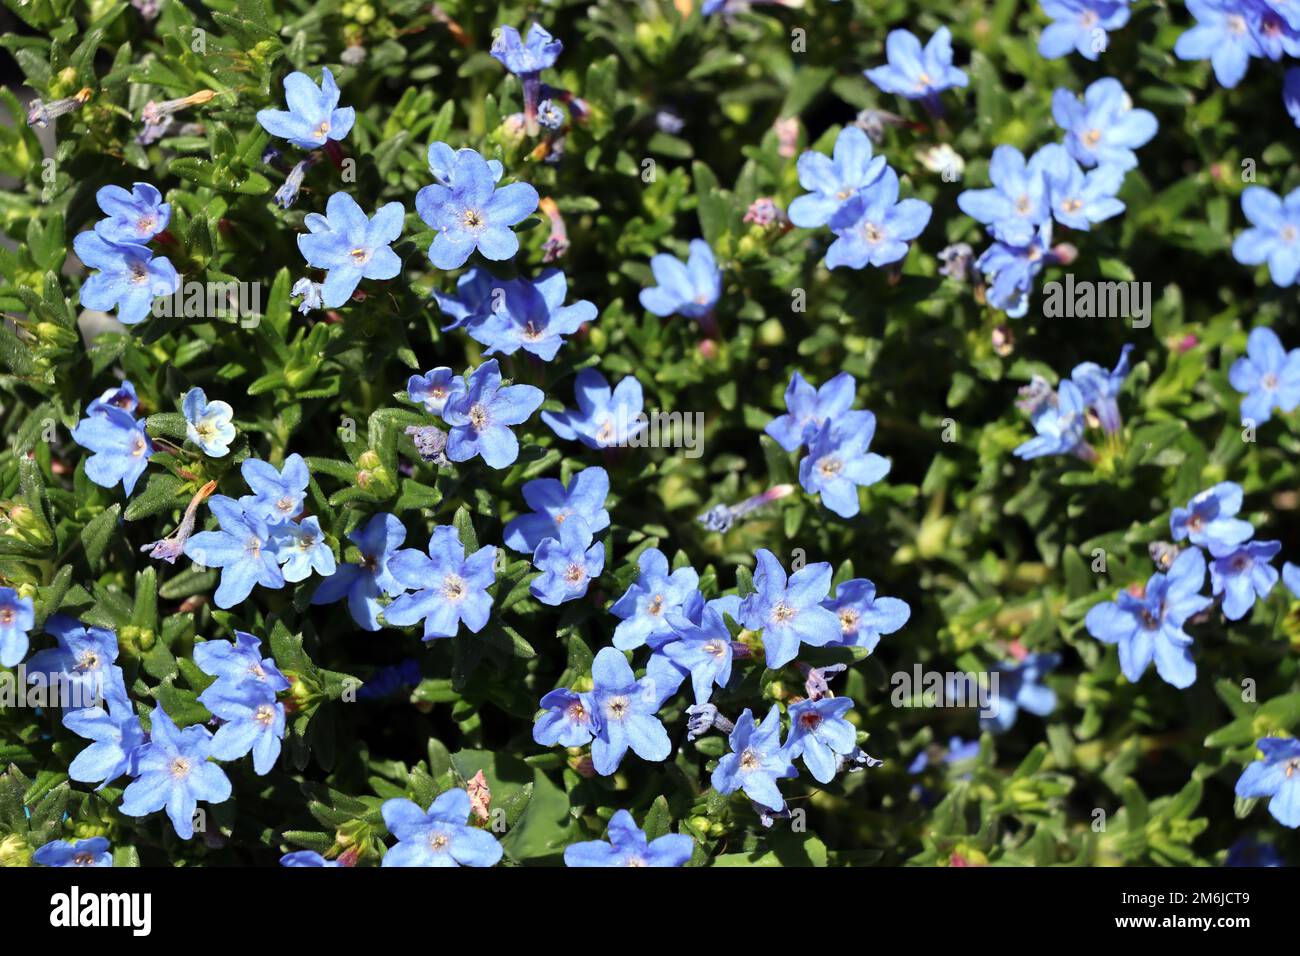 Southern stone seed - Lithodora diffusa, flowering plant Stock Photo